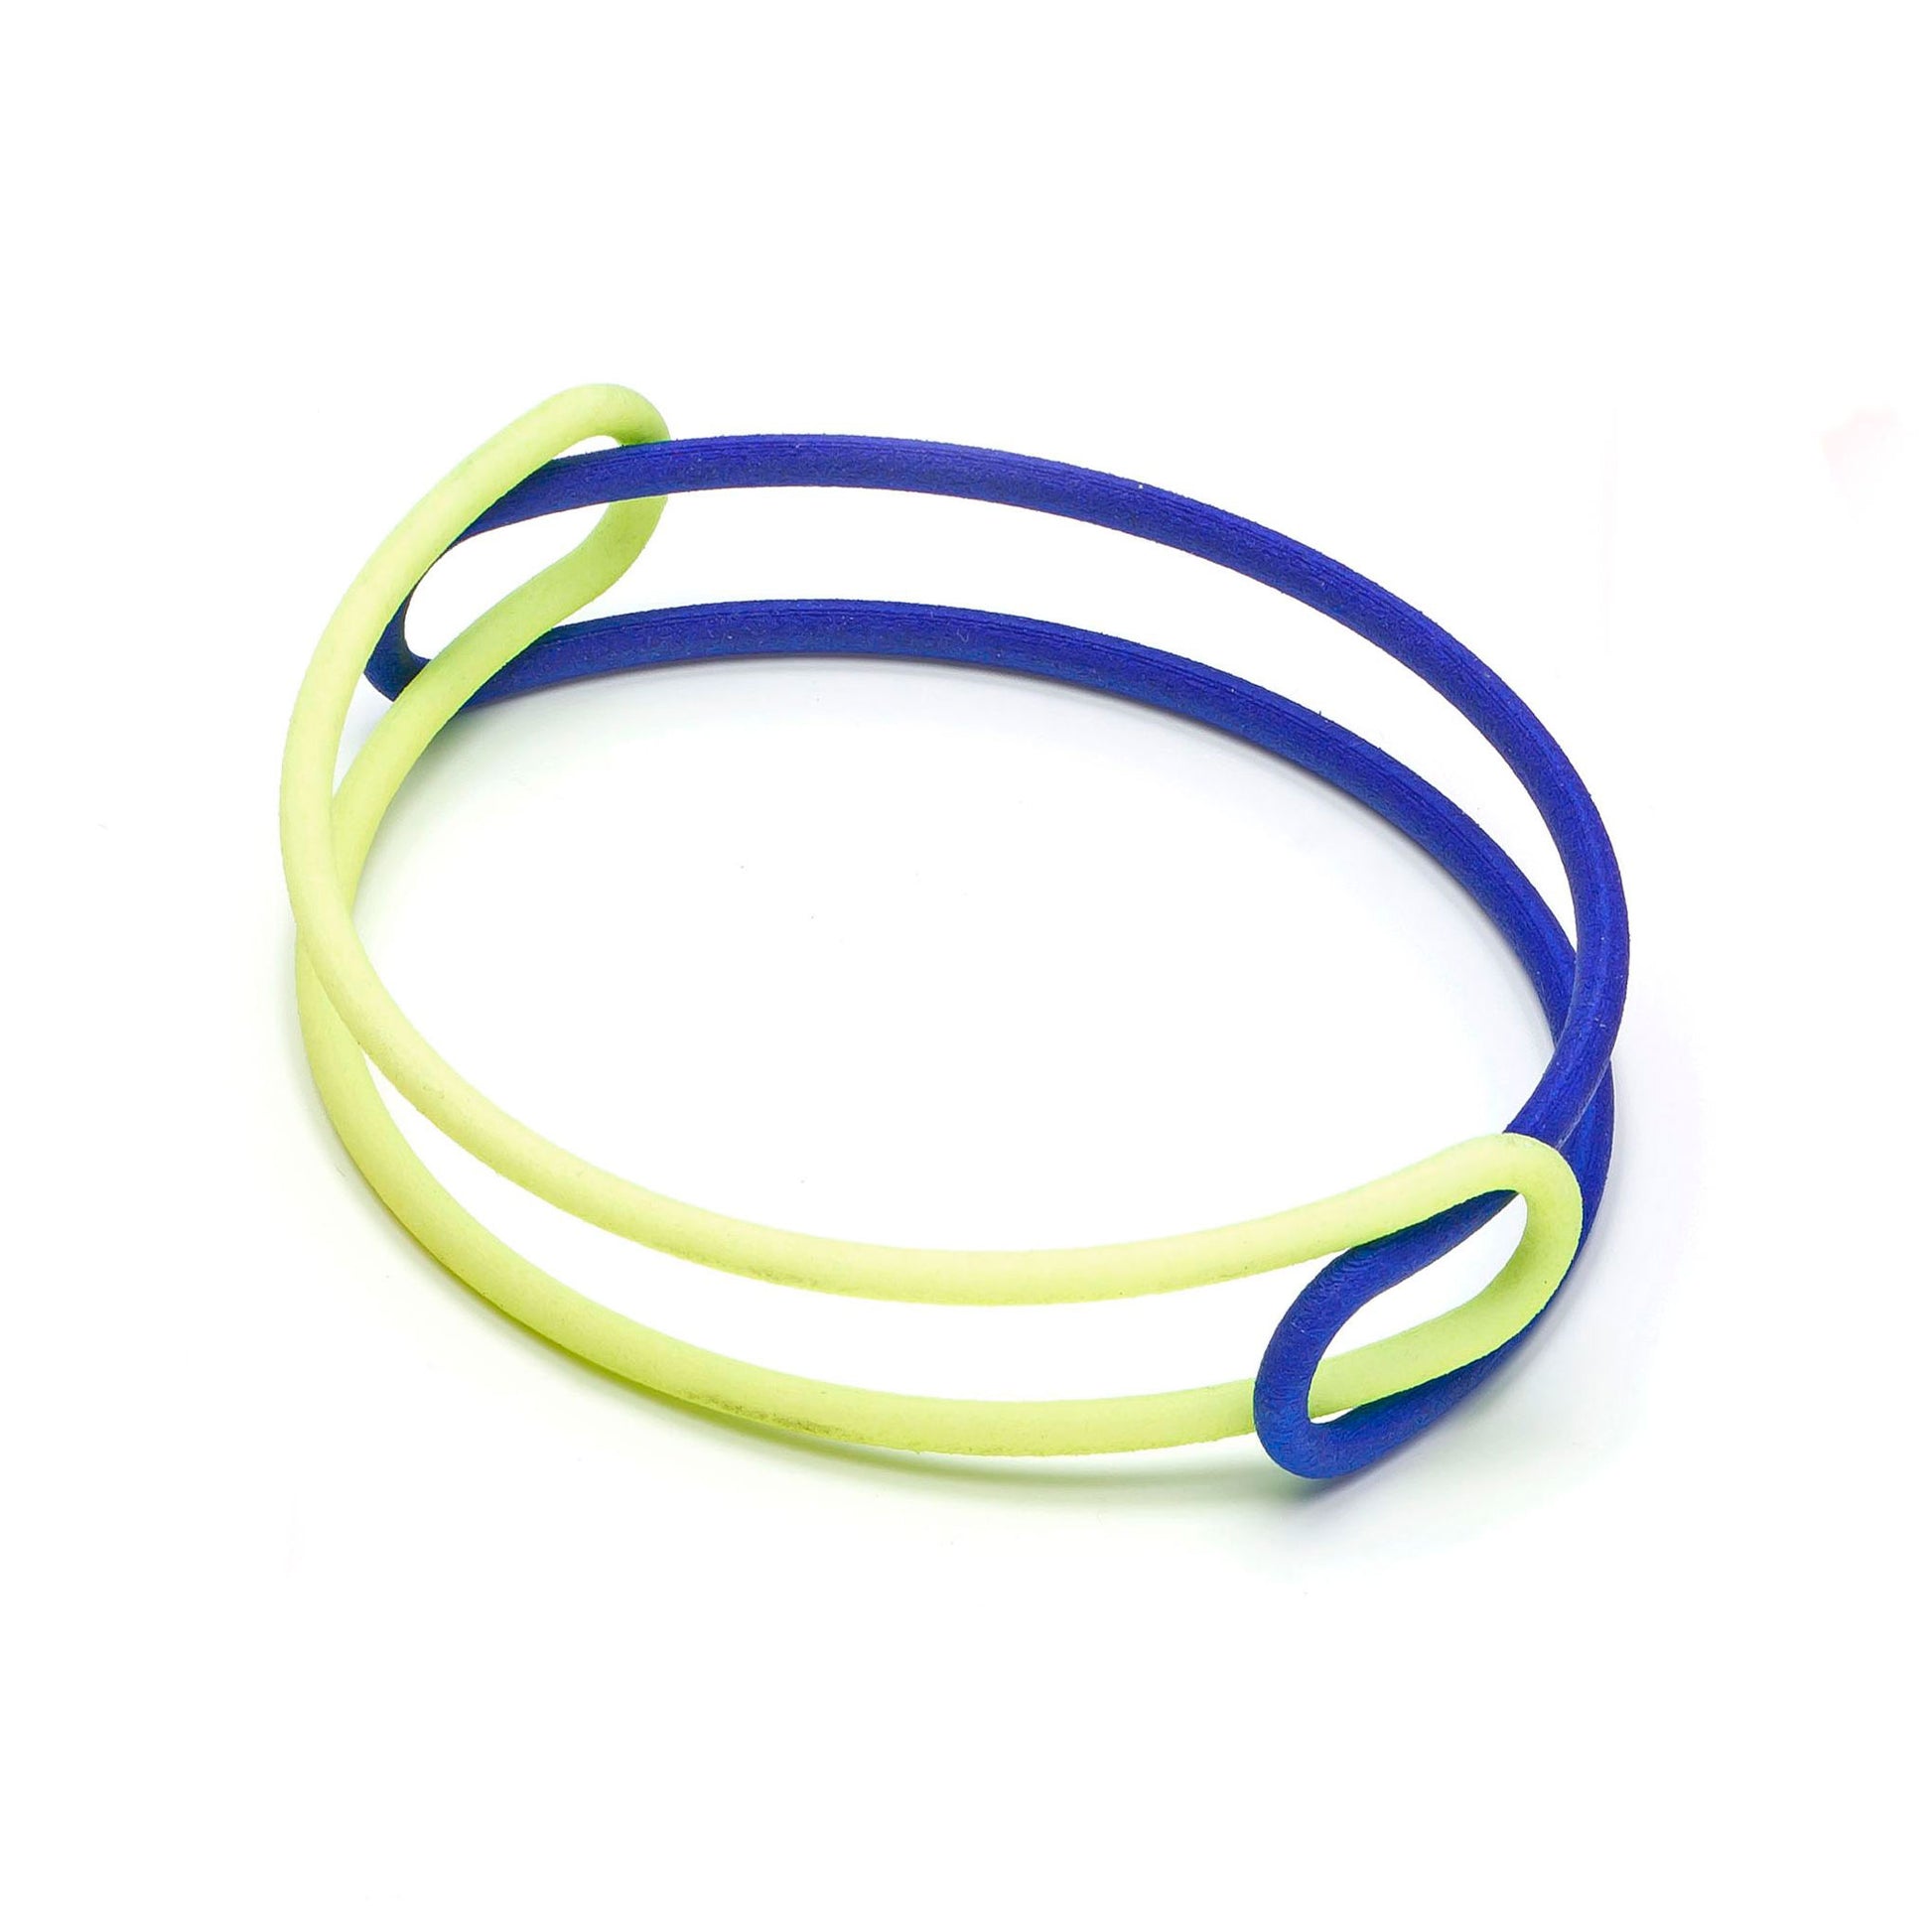 Neon and electric blue nylon loop bangle